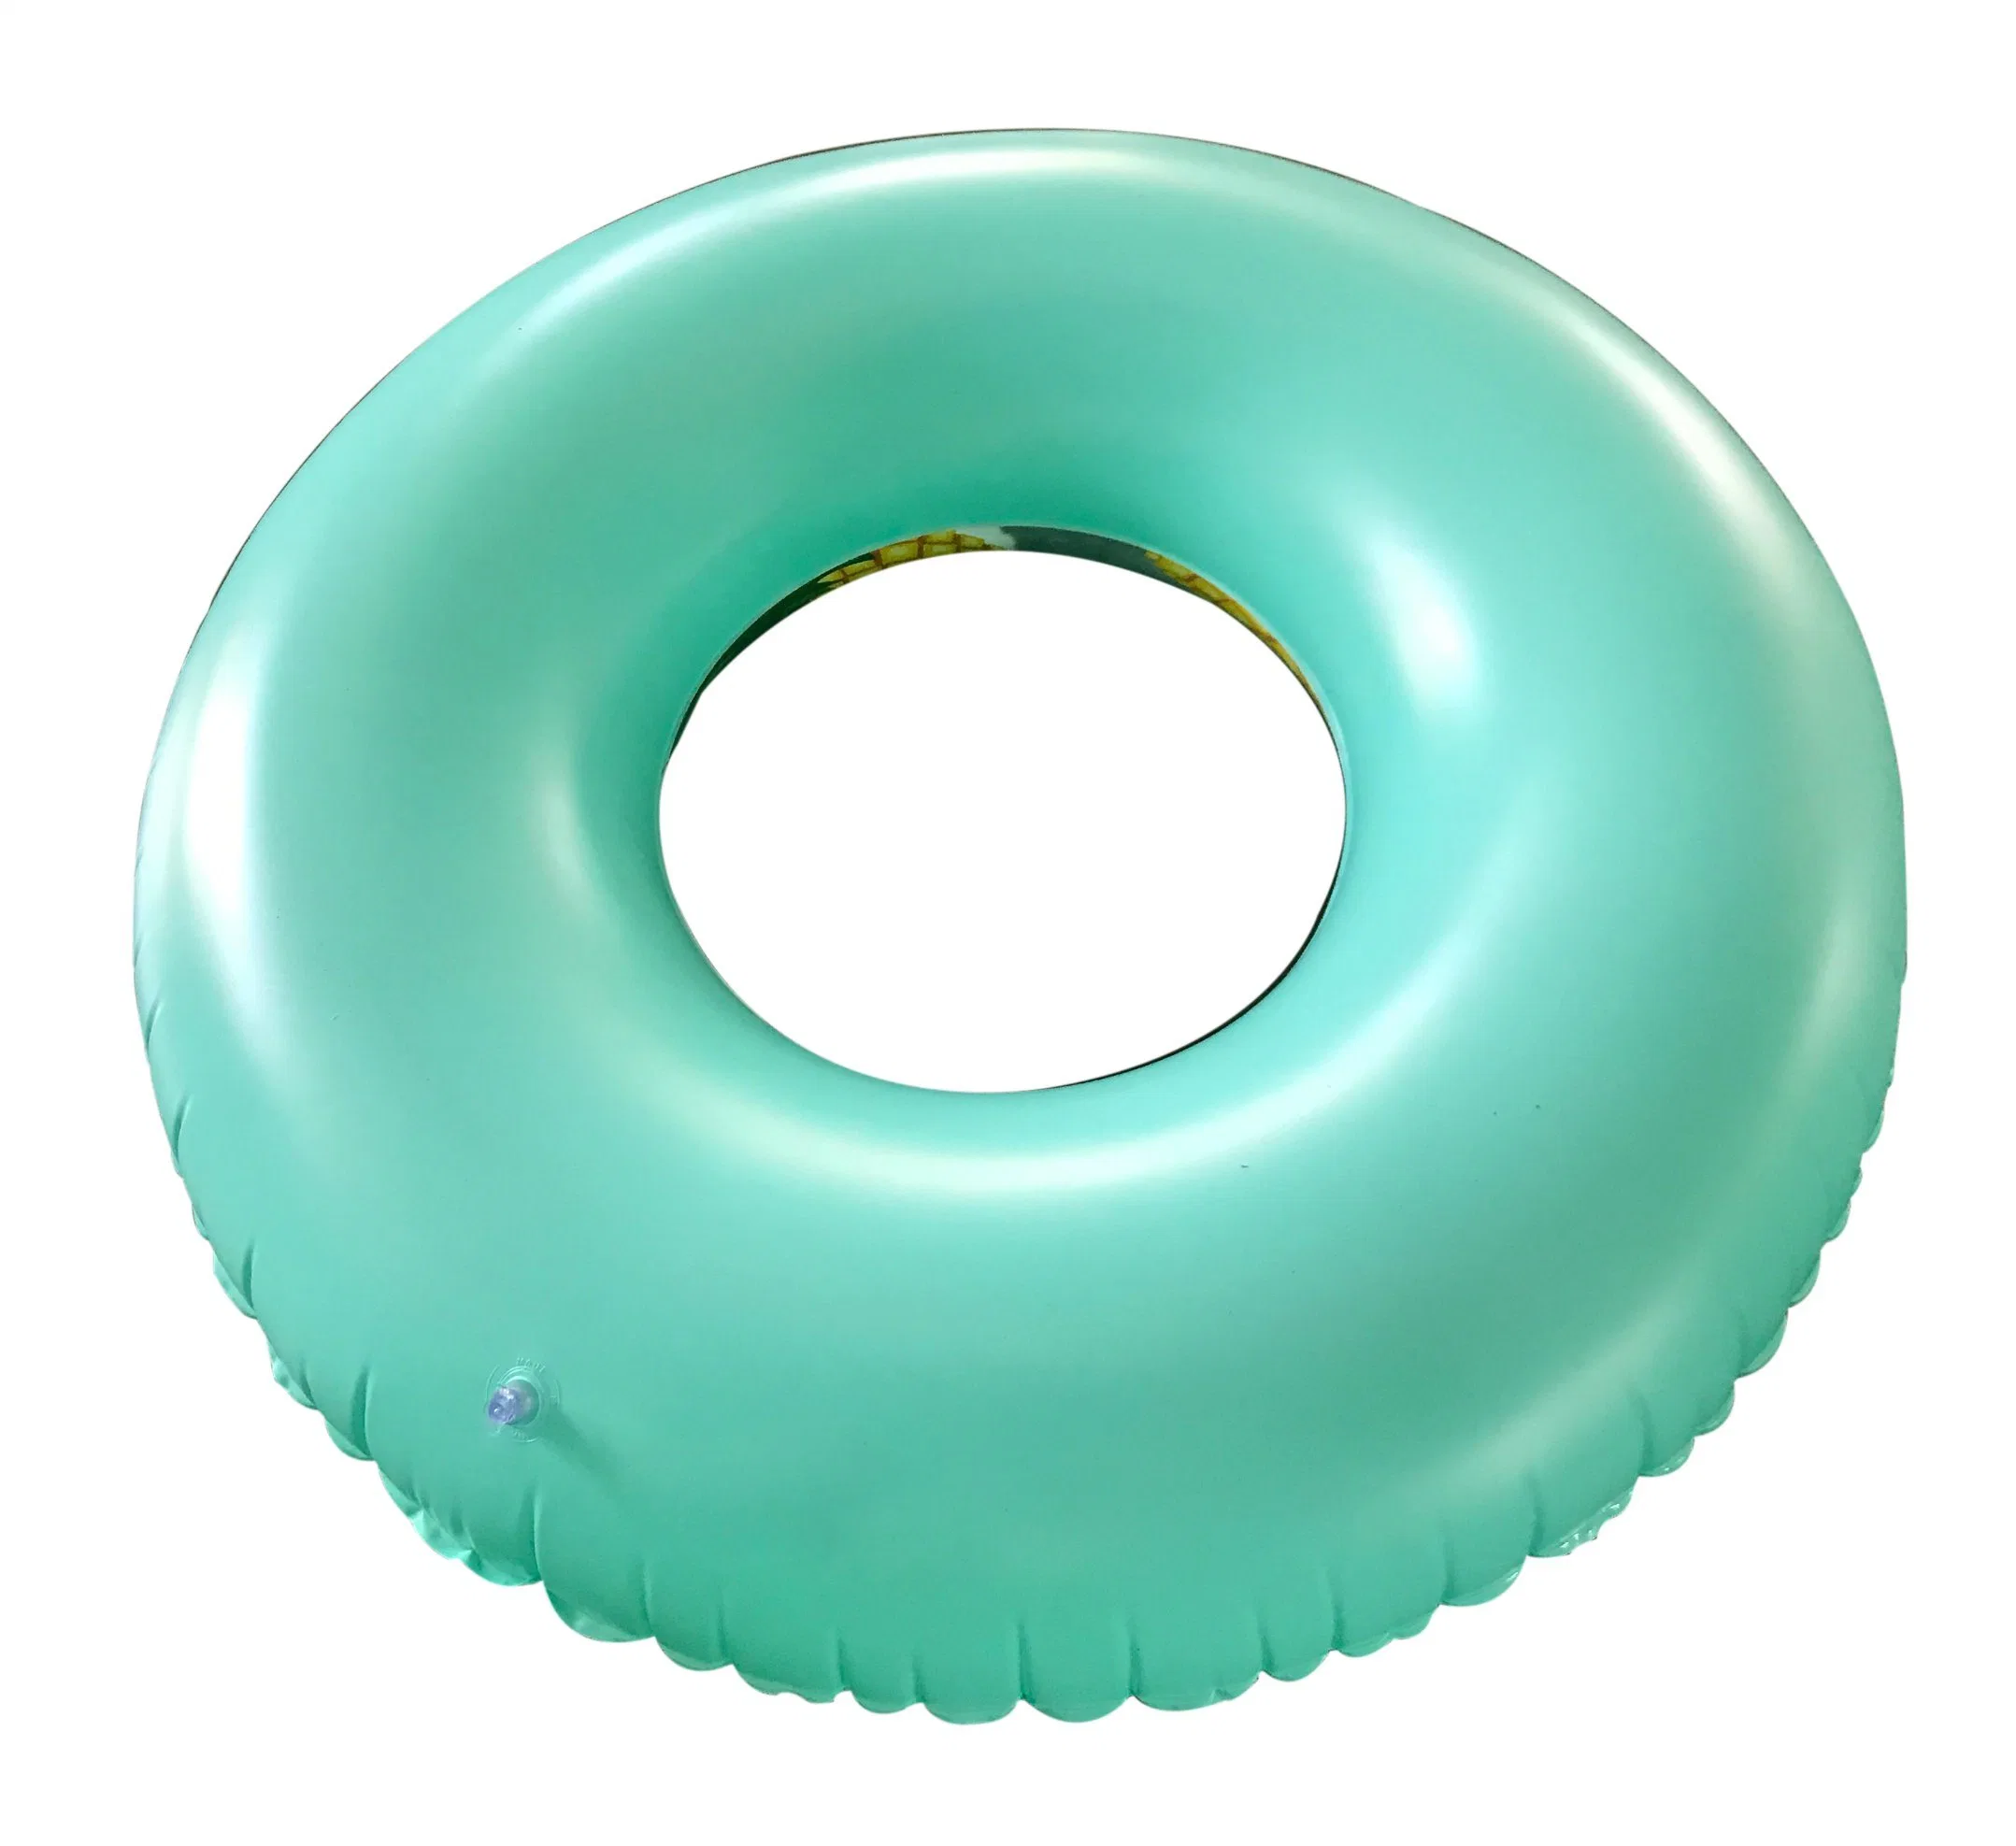 Niños PVC Inflatable Piscina flotante bebé Swim Ring niños Jugar Juguetes